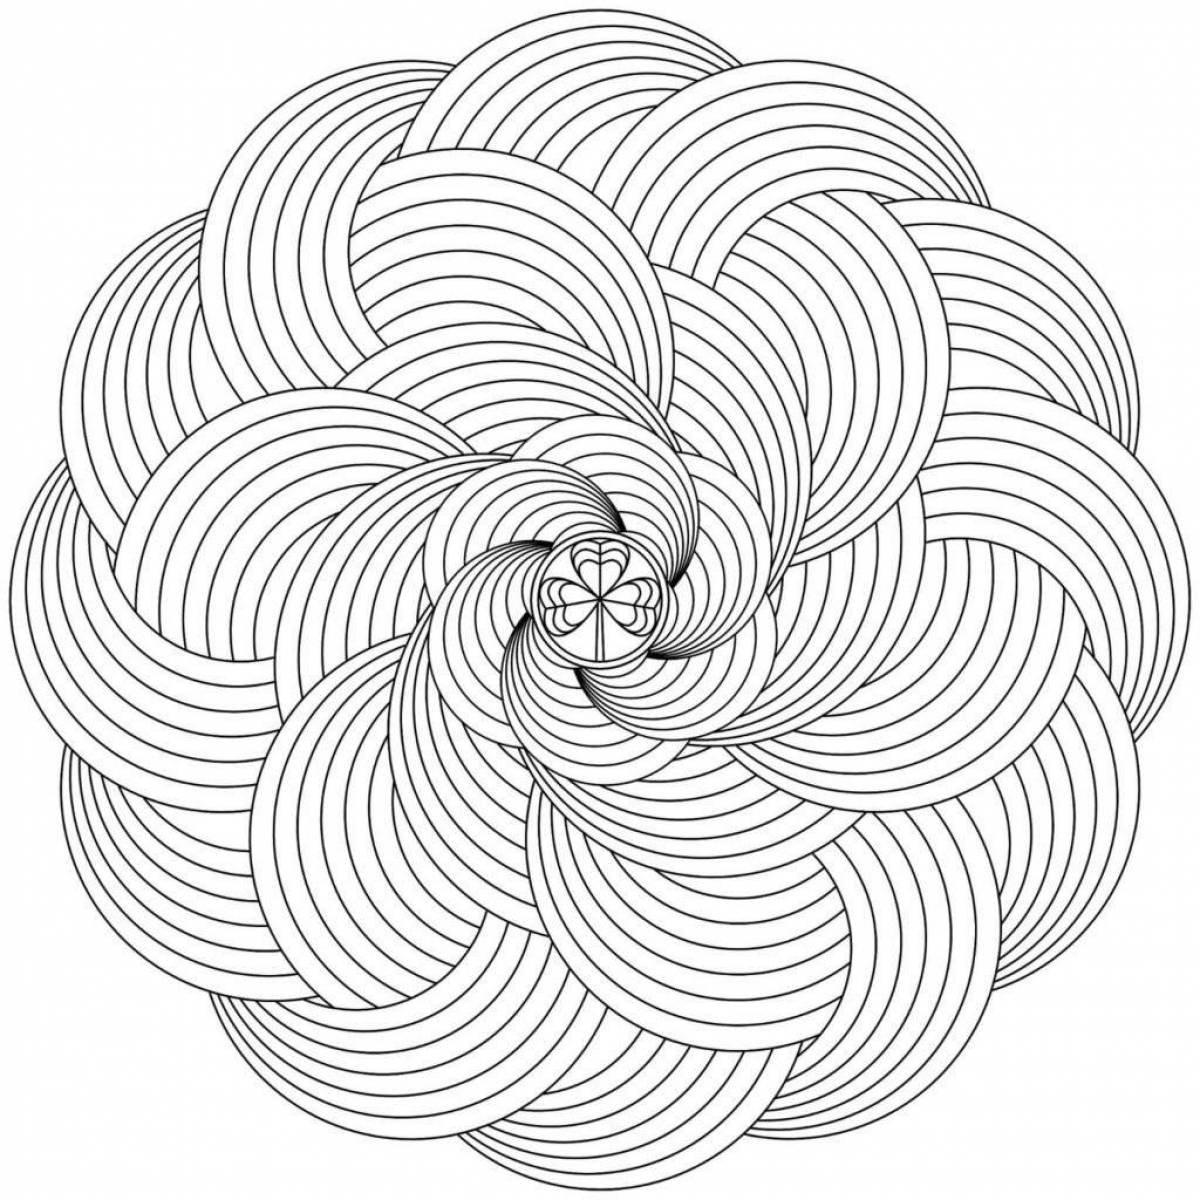 Fascinating spiral coloring